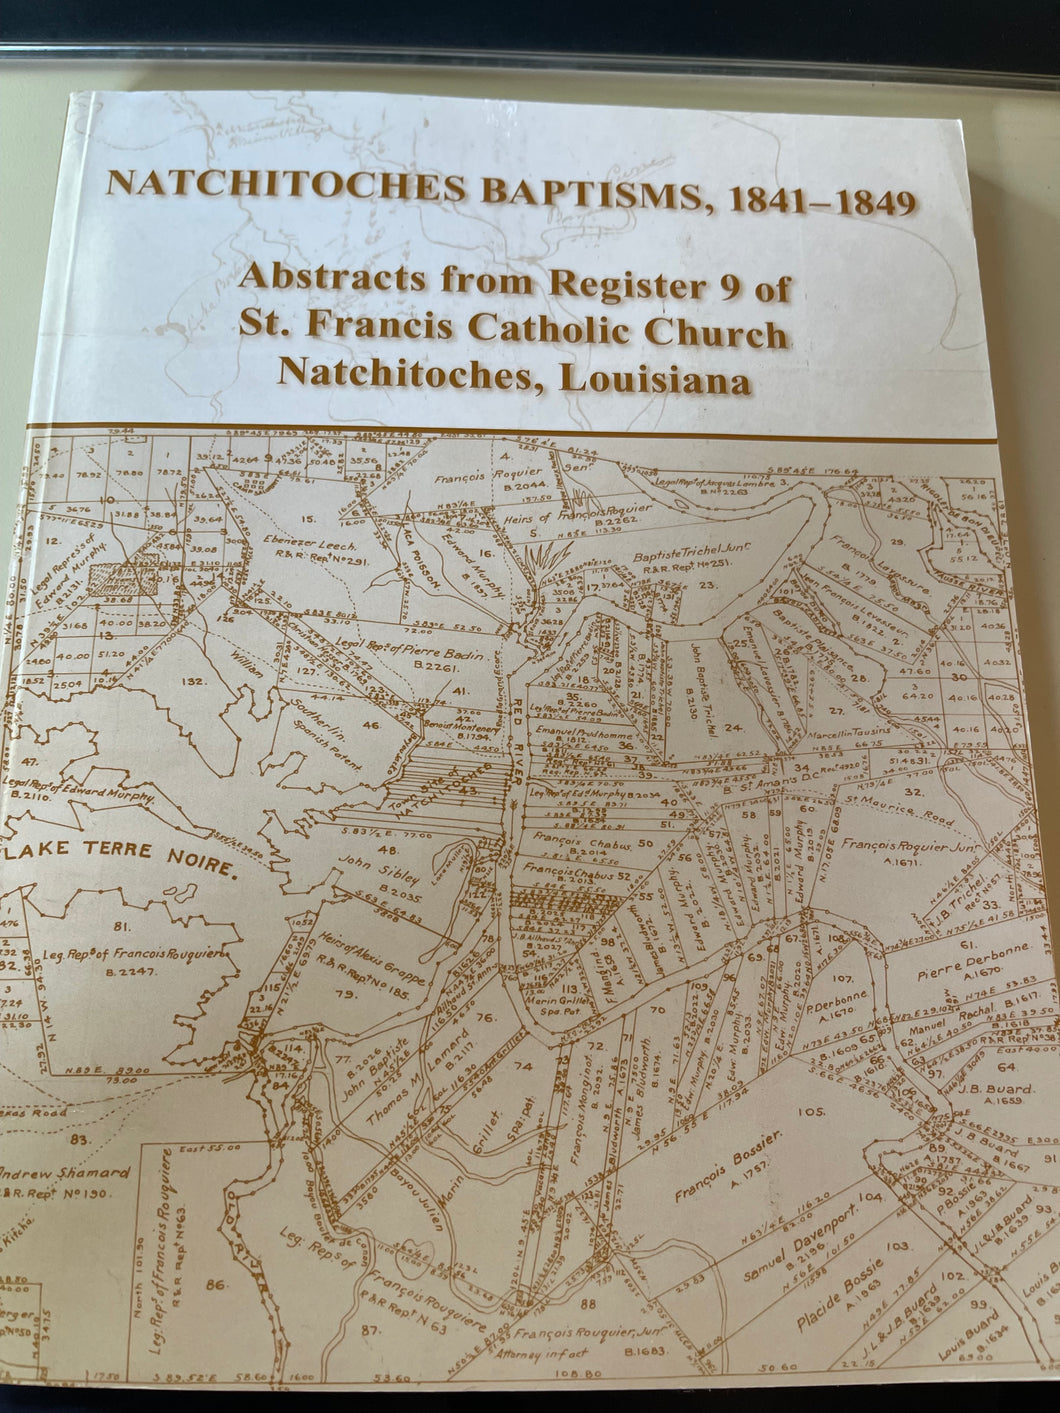 Natchitoches Baptisms, 1841-1849